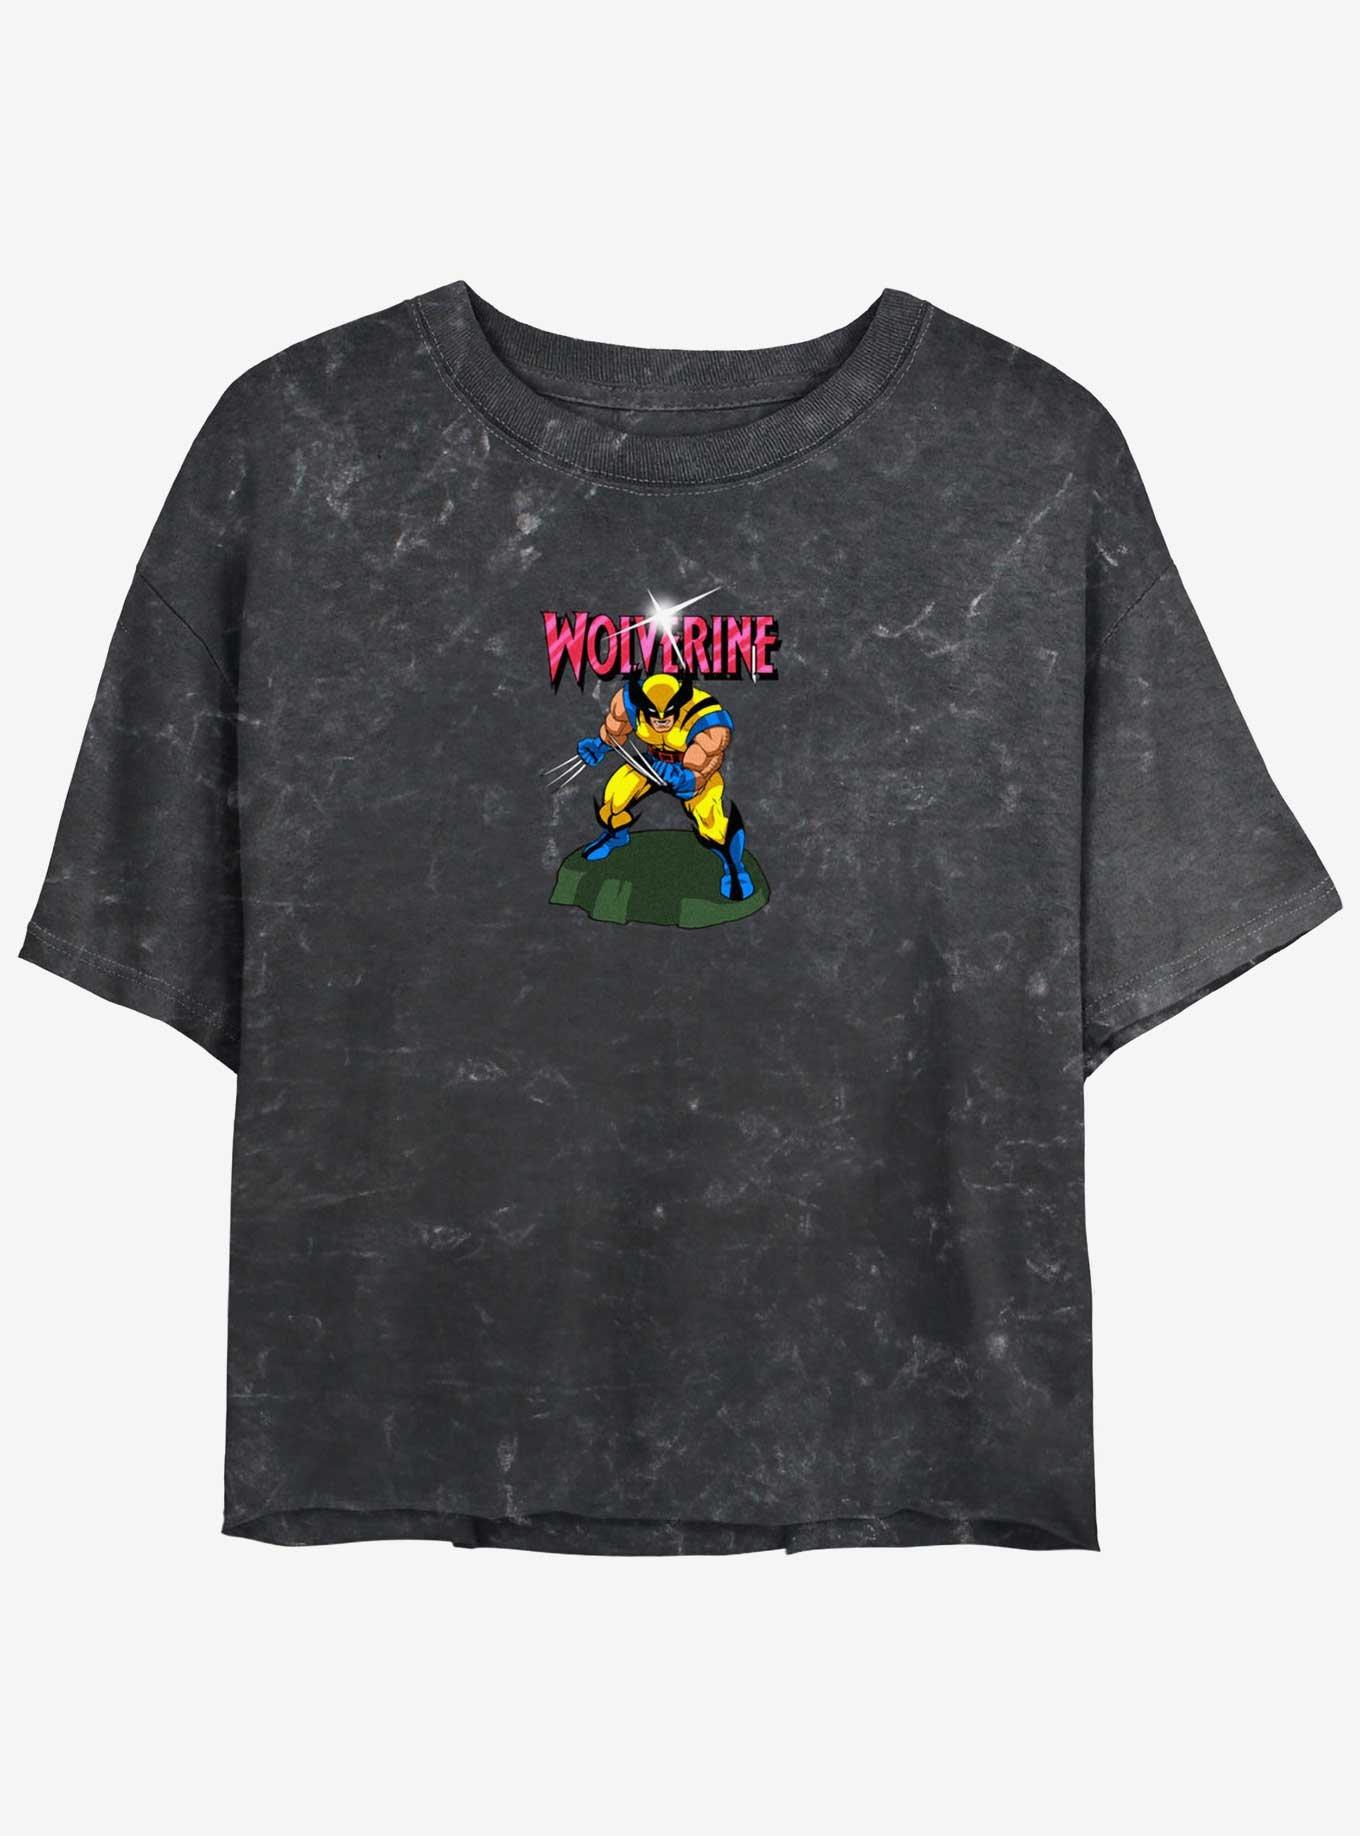 Wolverine Action Pose Womens Mineral Wash Crop T-Shirt, , hi-res